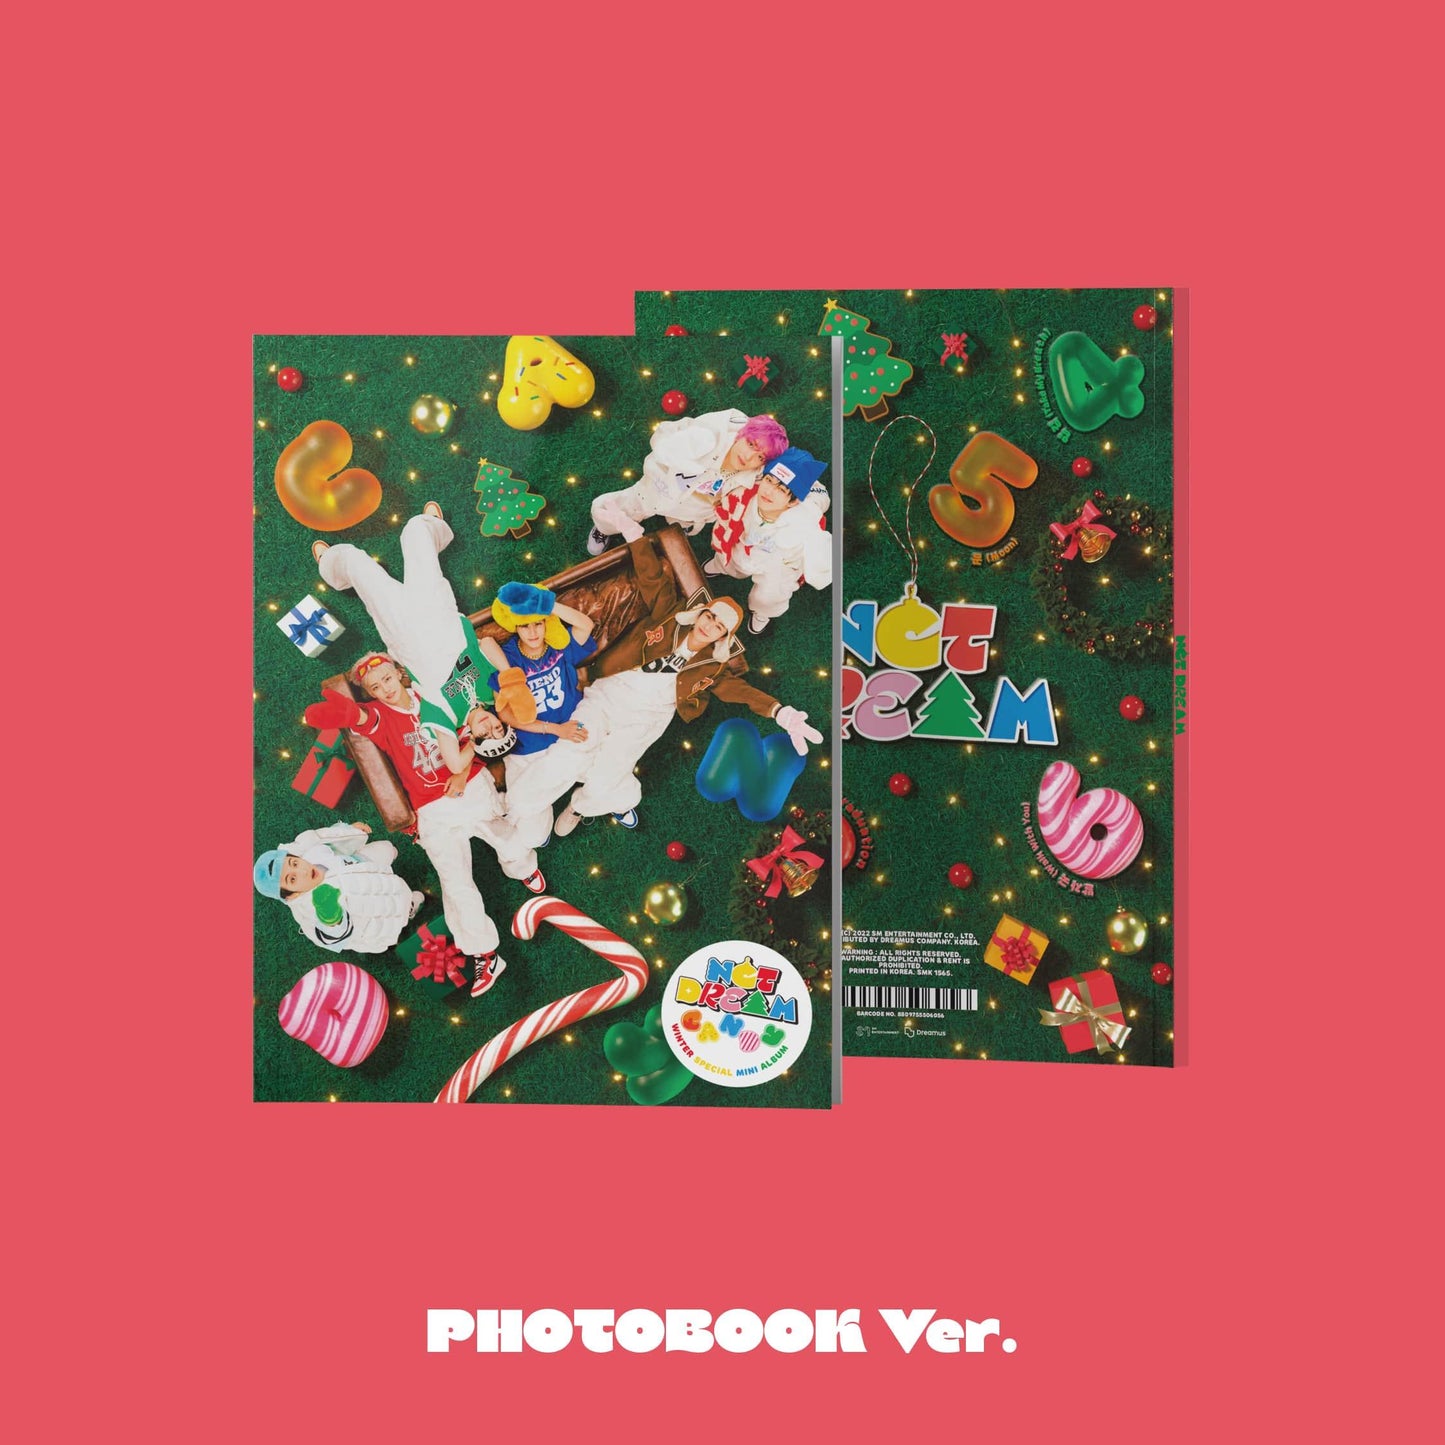 NCT DREAM - WINTER SPECIAL MINI ALBUM  - CANDY - (PHOTOBOOK VER.) - Pre-Order - J-Store Online